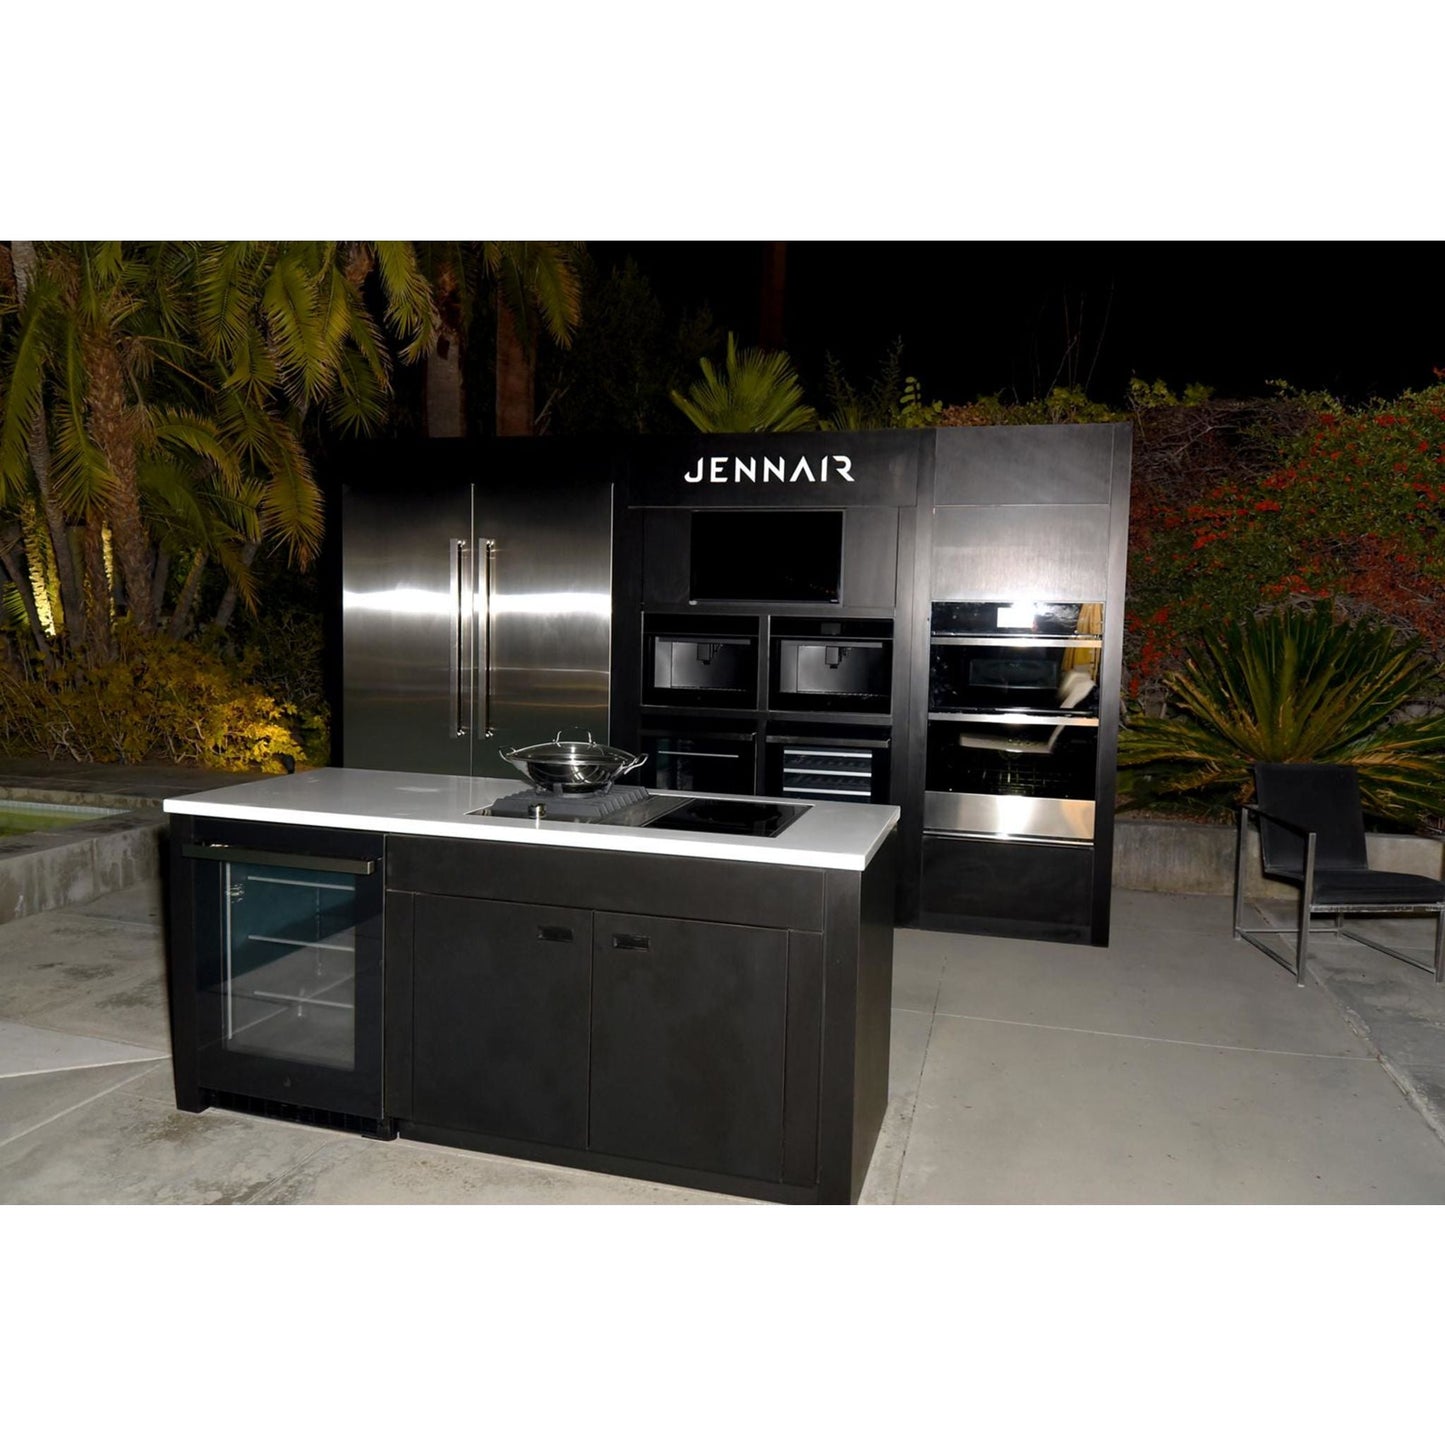 JennAir 15" Module Induction Cooktop (JIE4115GS) - Stainless Steel